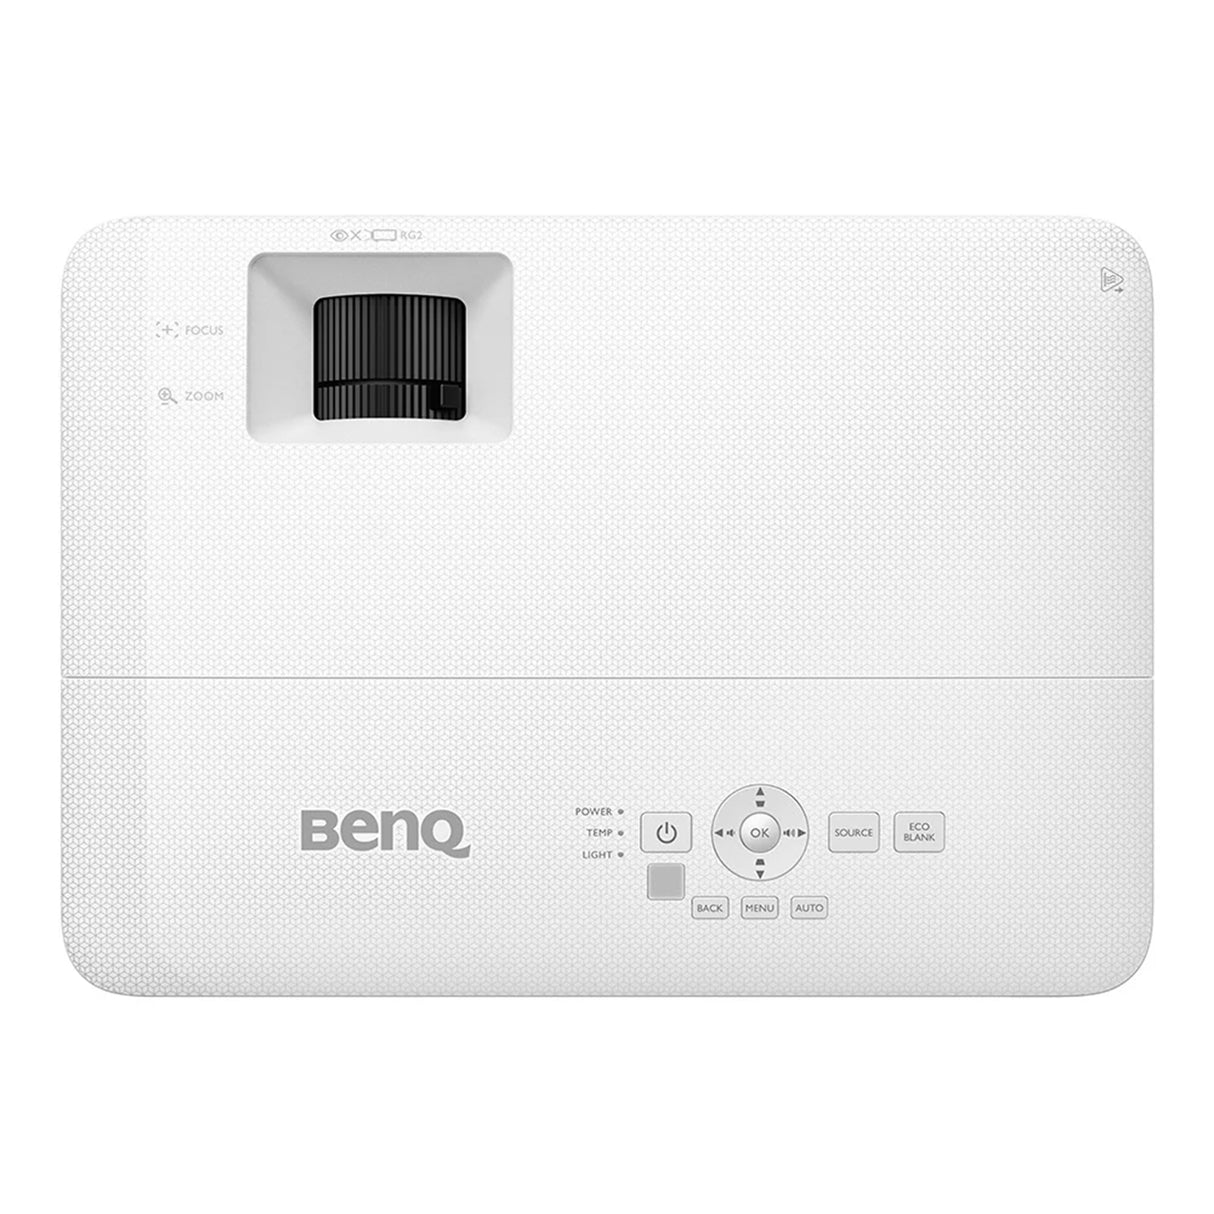 BenQ TH585P - Full HD 3500 Lumens DLP Home Theatre Projector